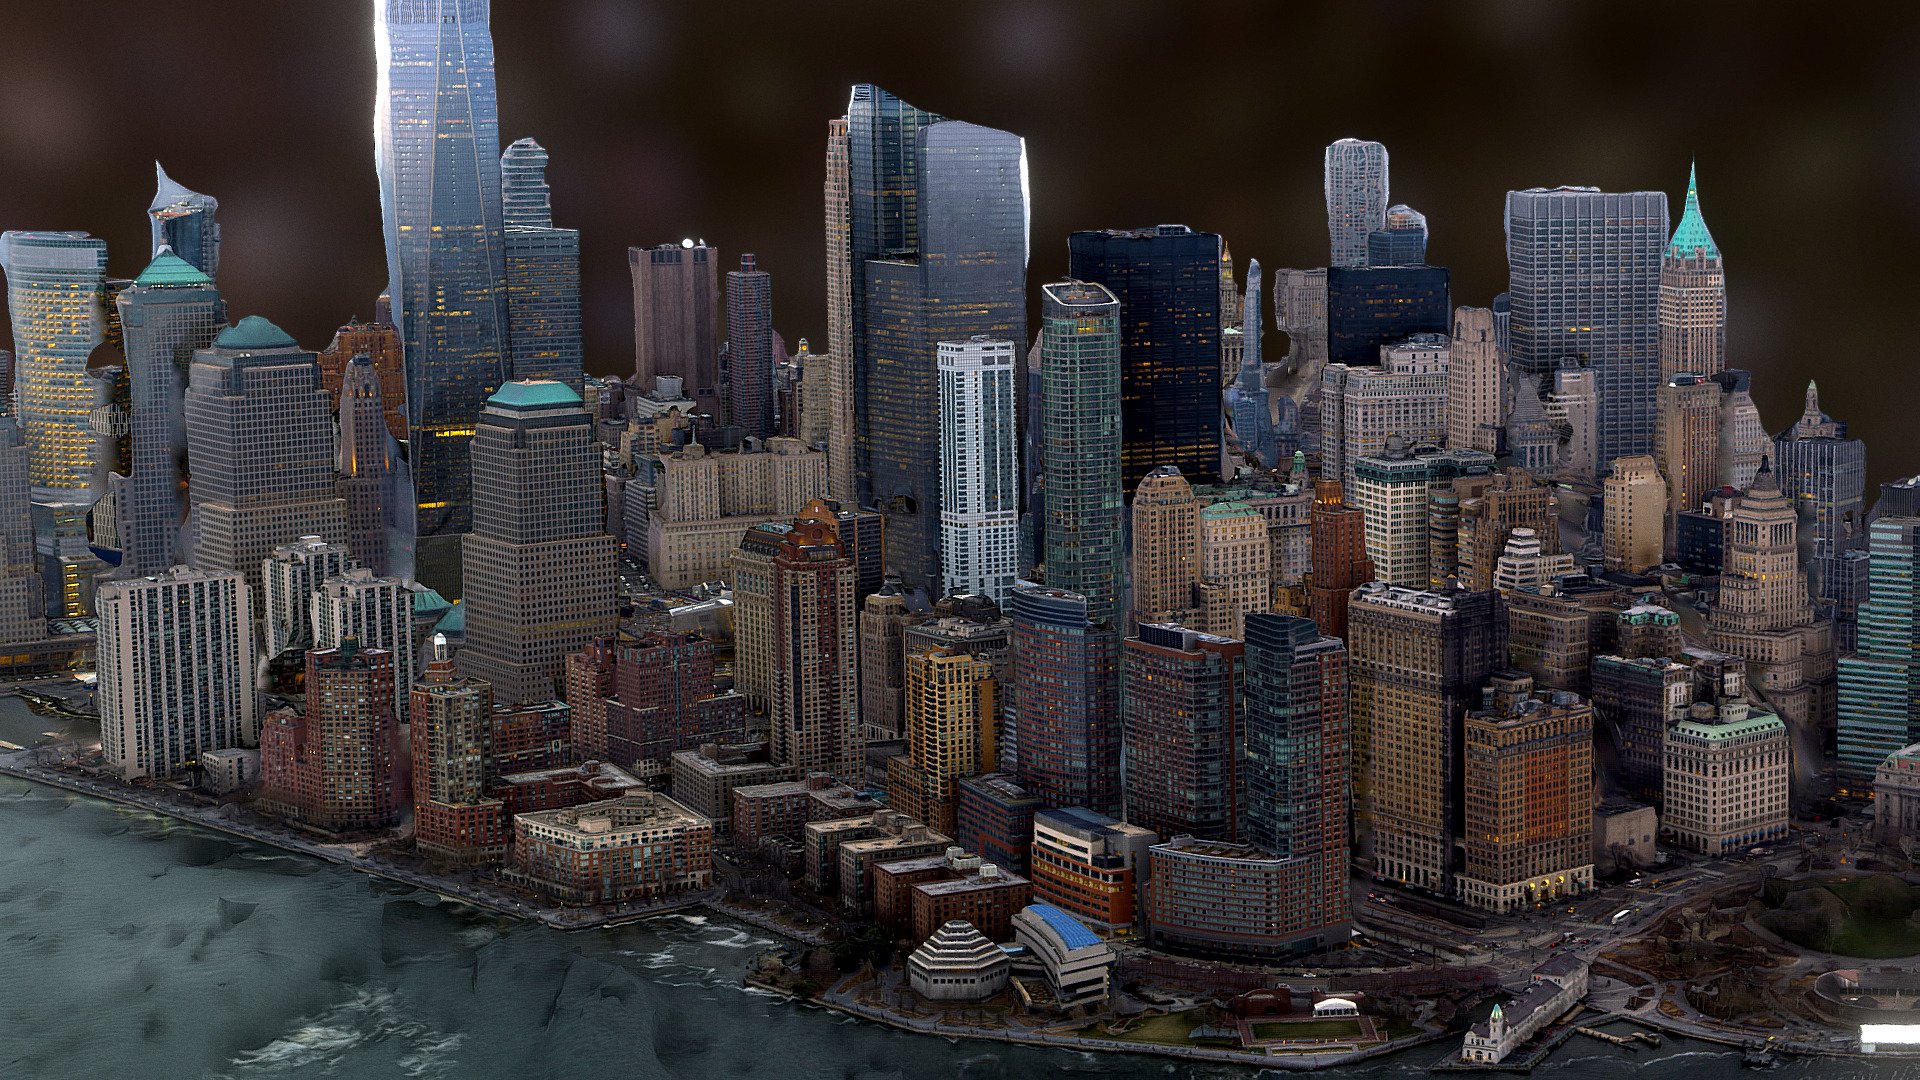 NYC 3D Model Download